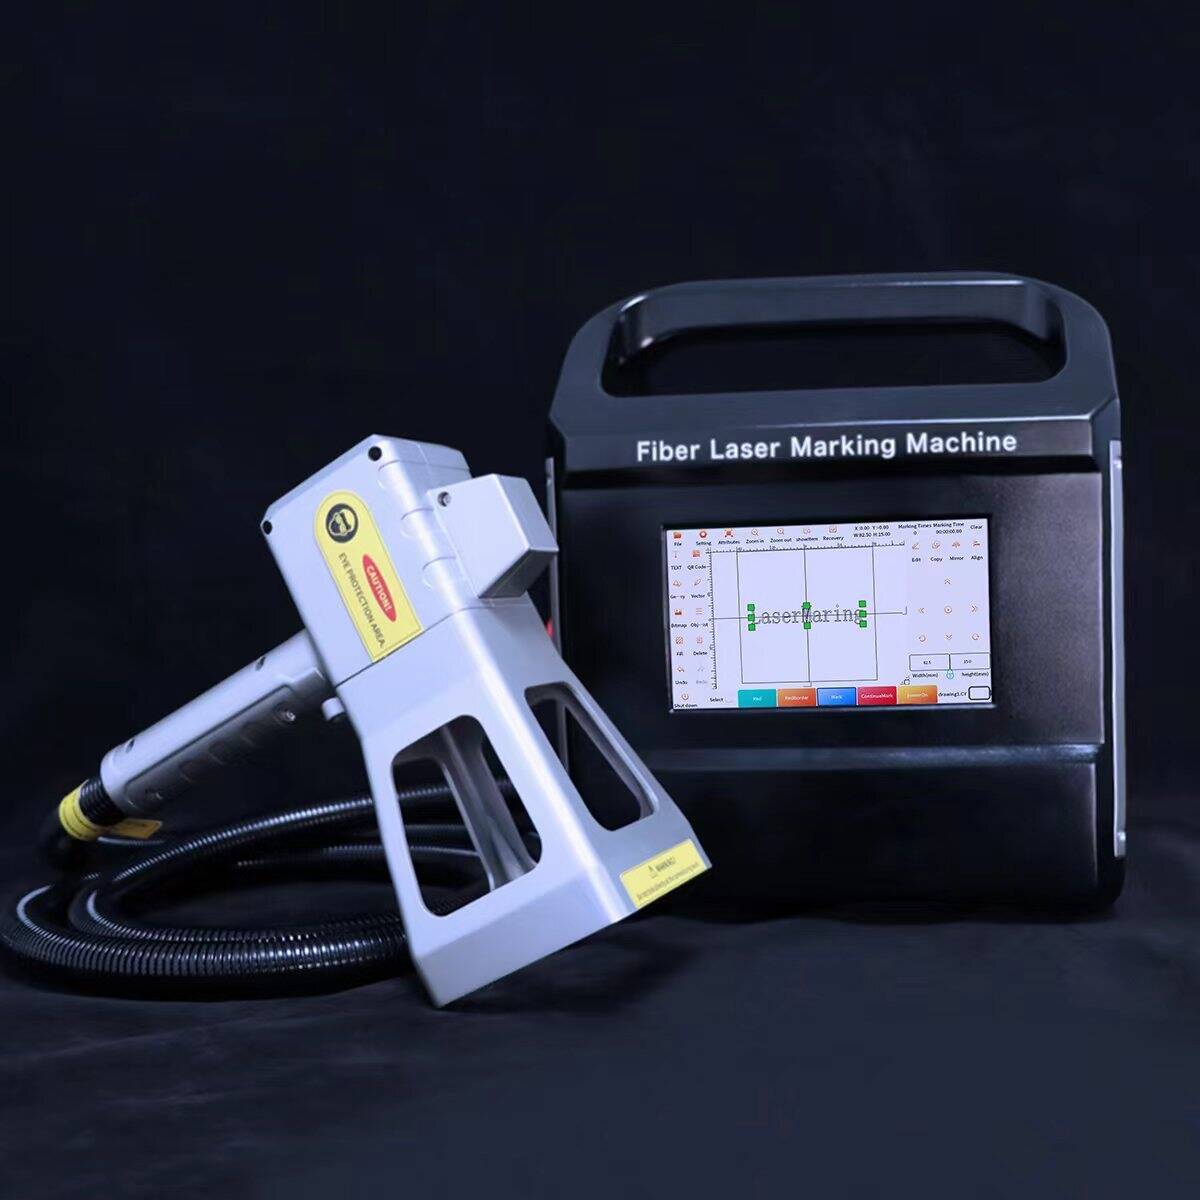 hanheld lightweight metal fiber laser marking machine